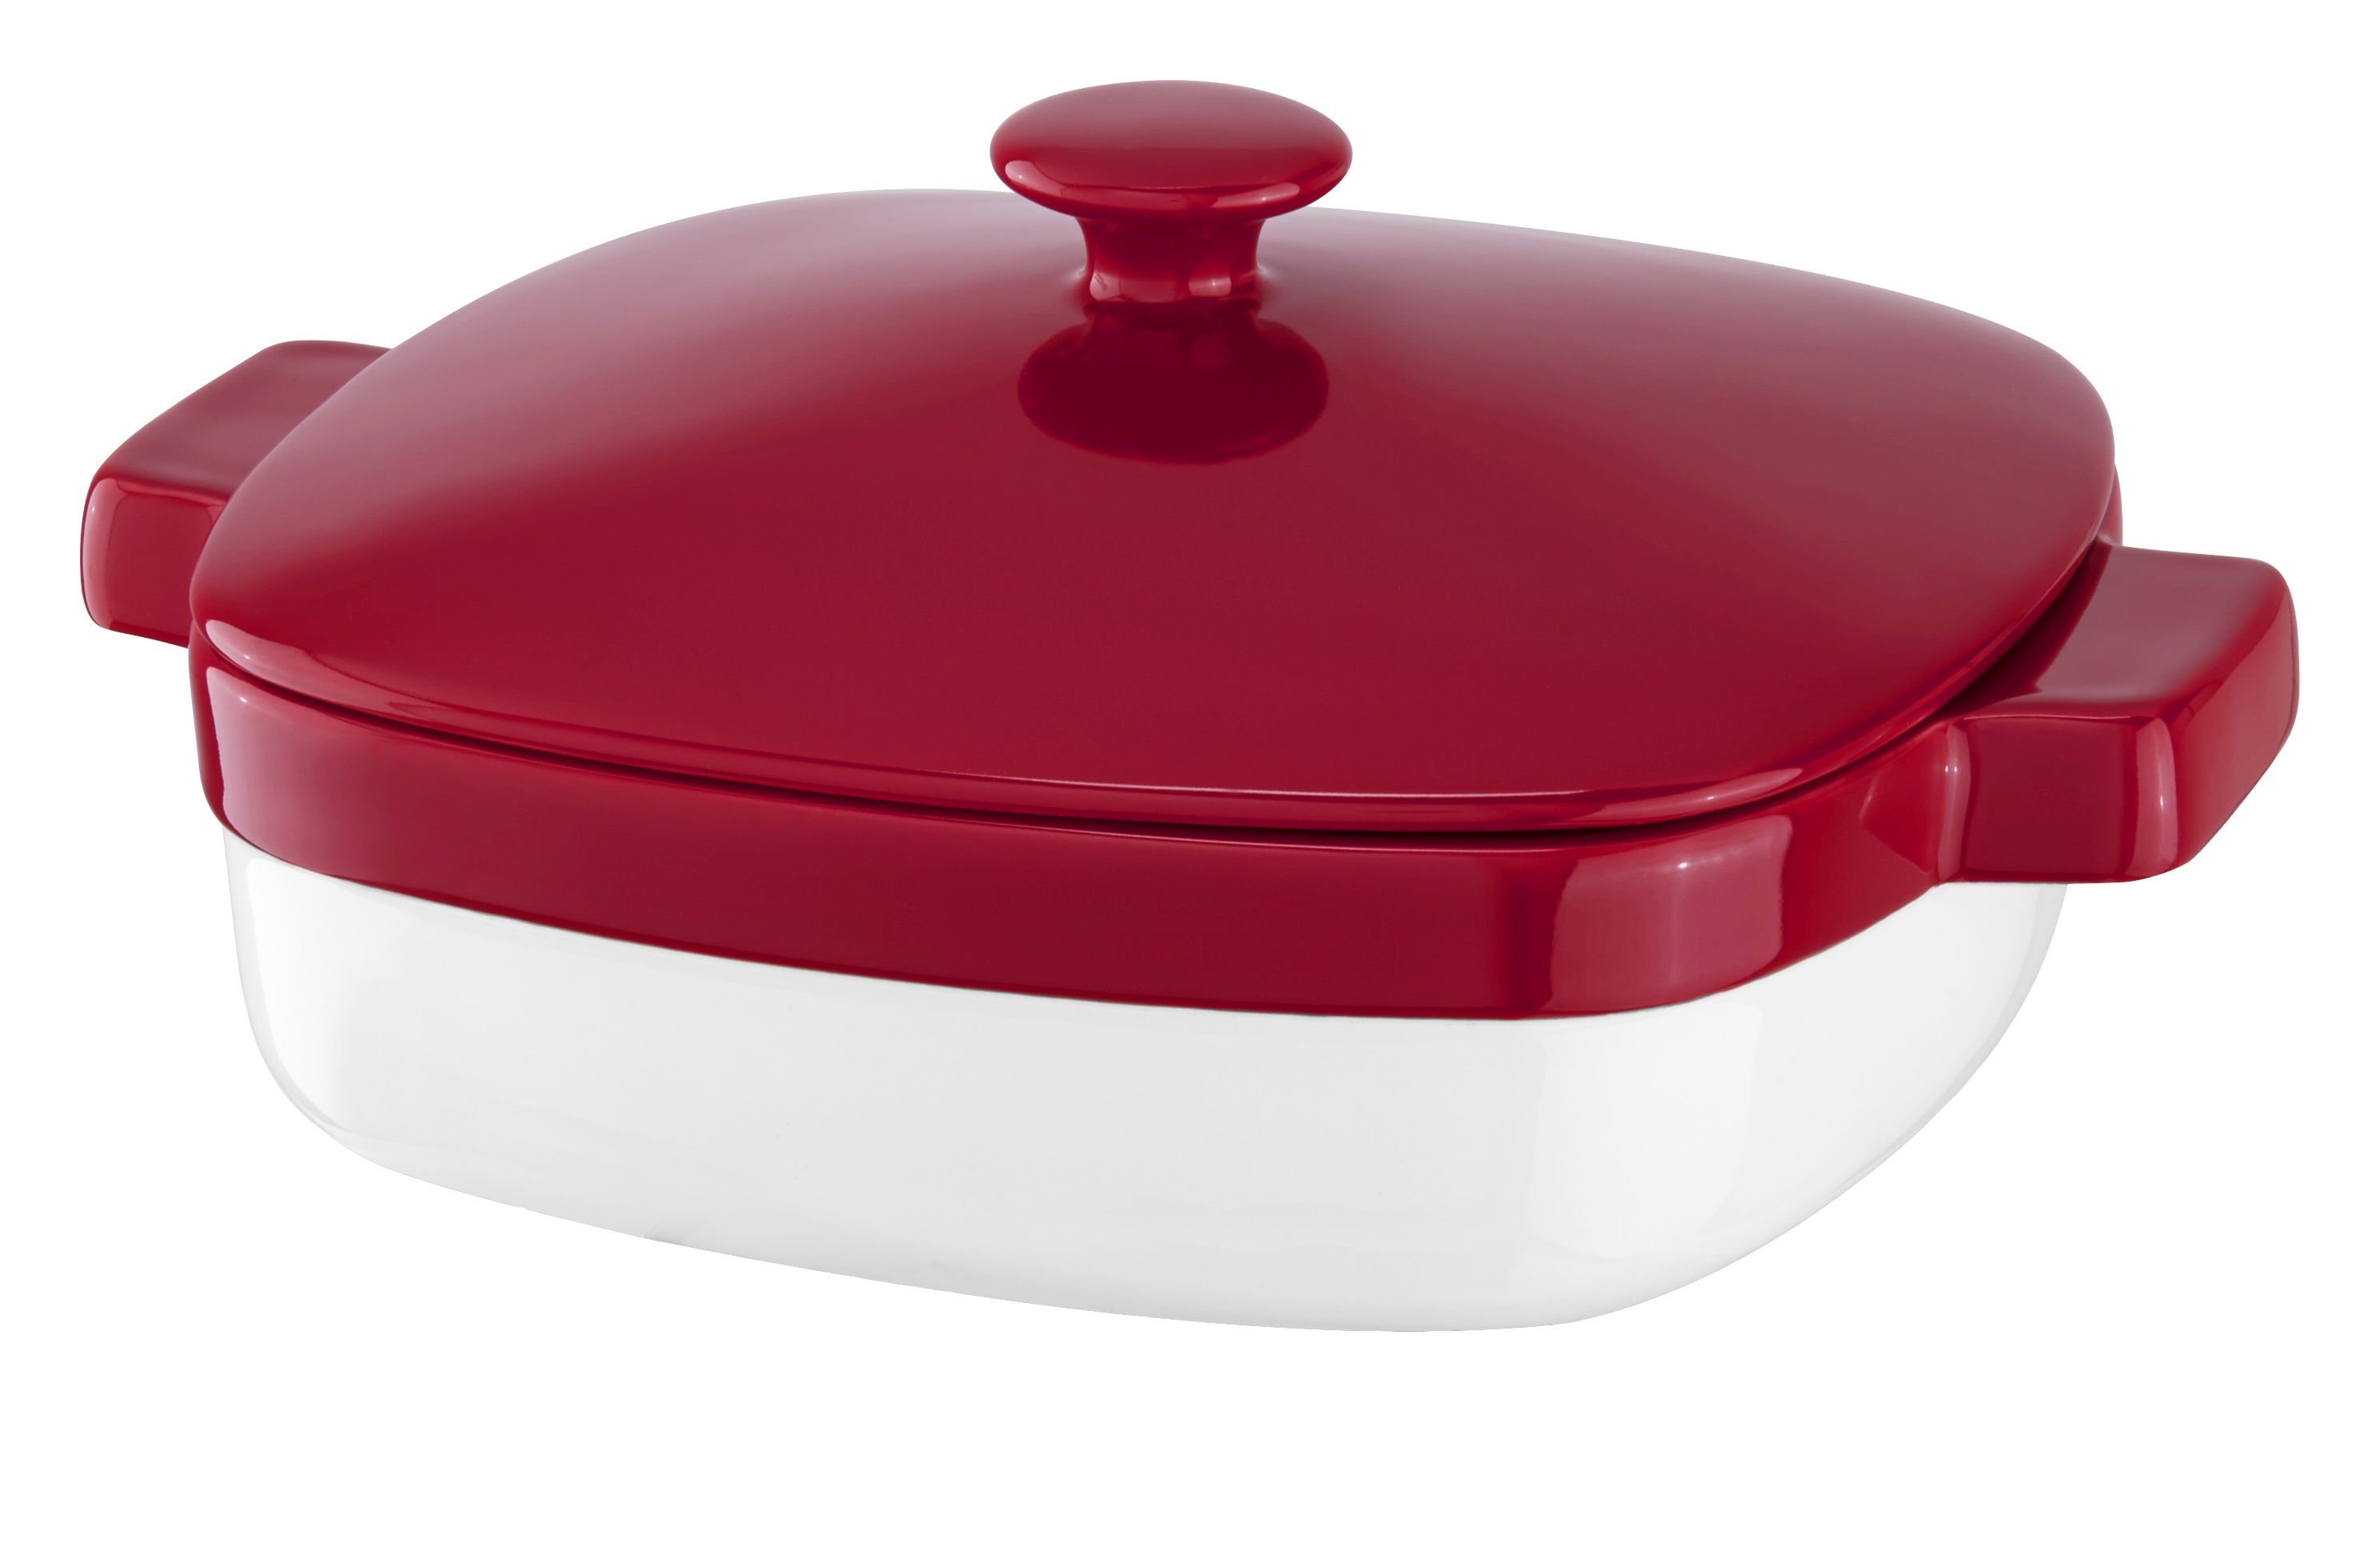 KBLR28CRER 2.8 Quart Streamline Ceramic Casserole Dish - Empire Red